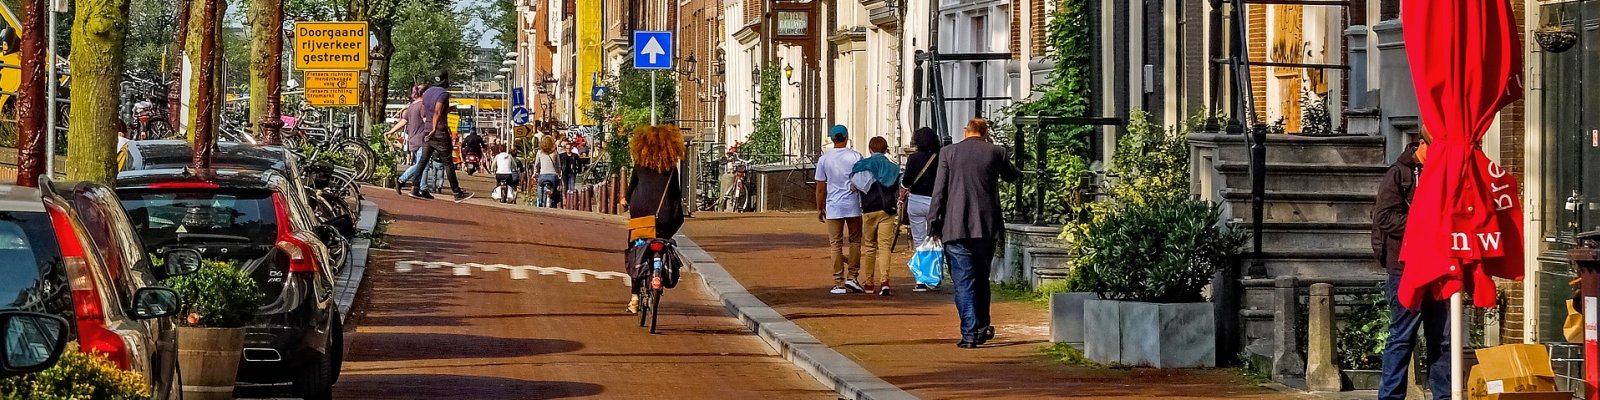 Fietser op straat in Amsterdam (Pixabay)